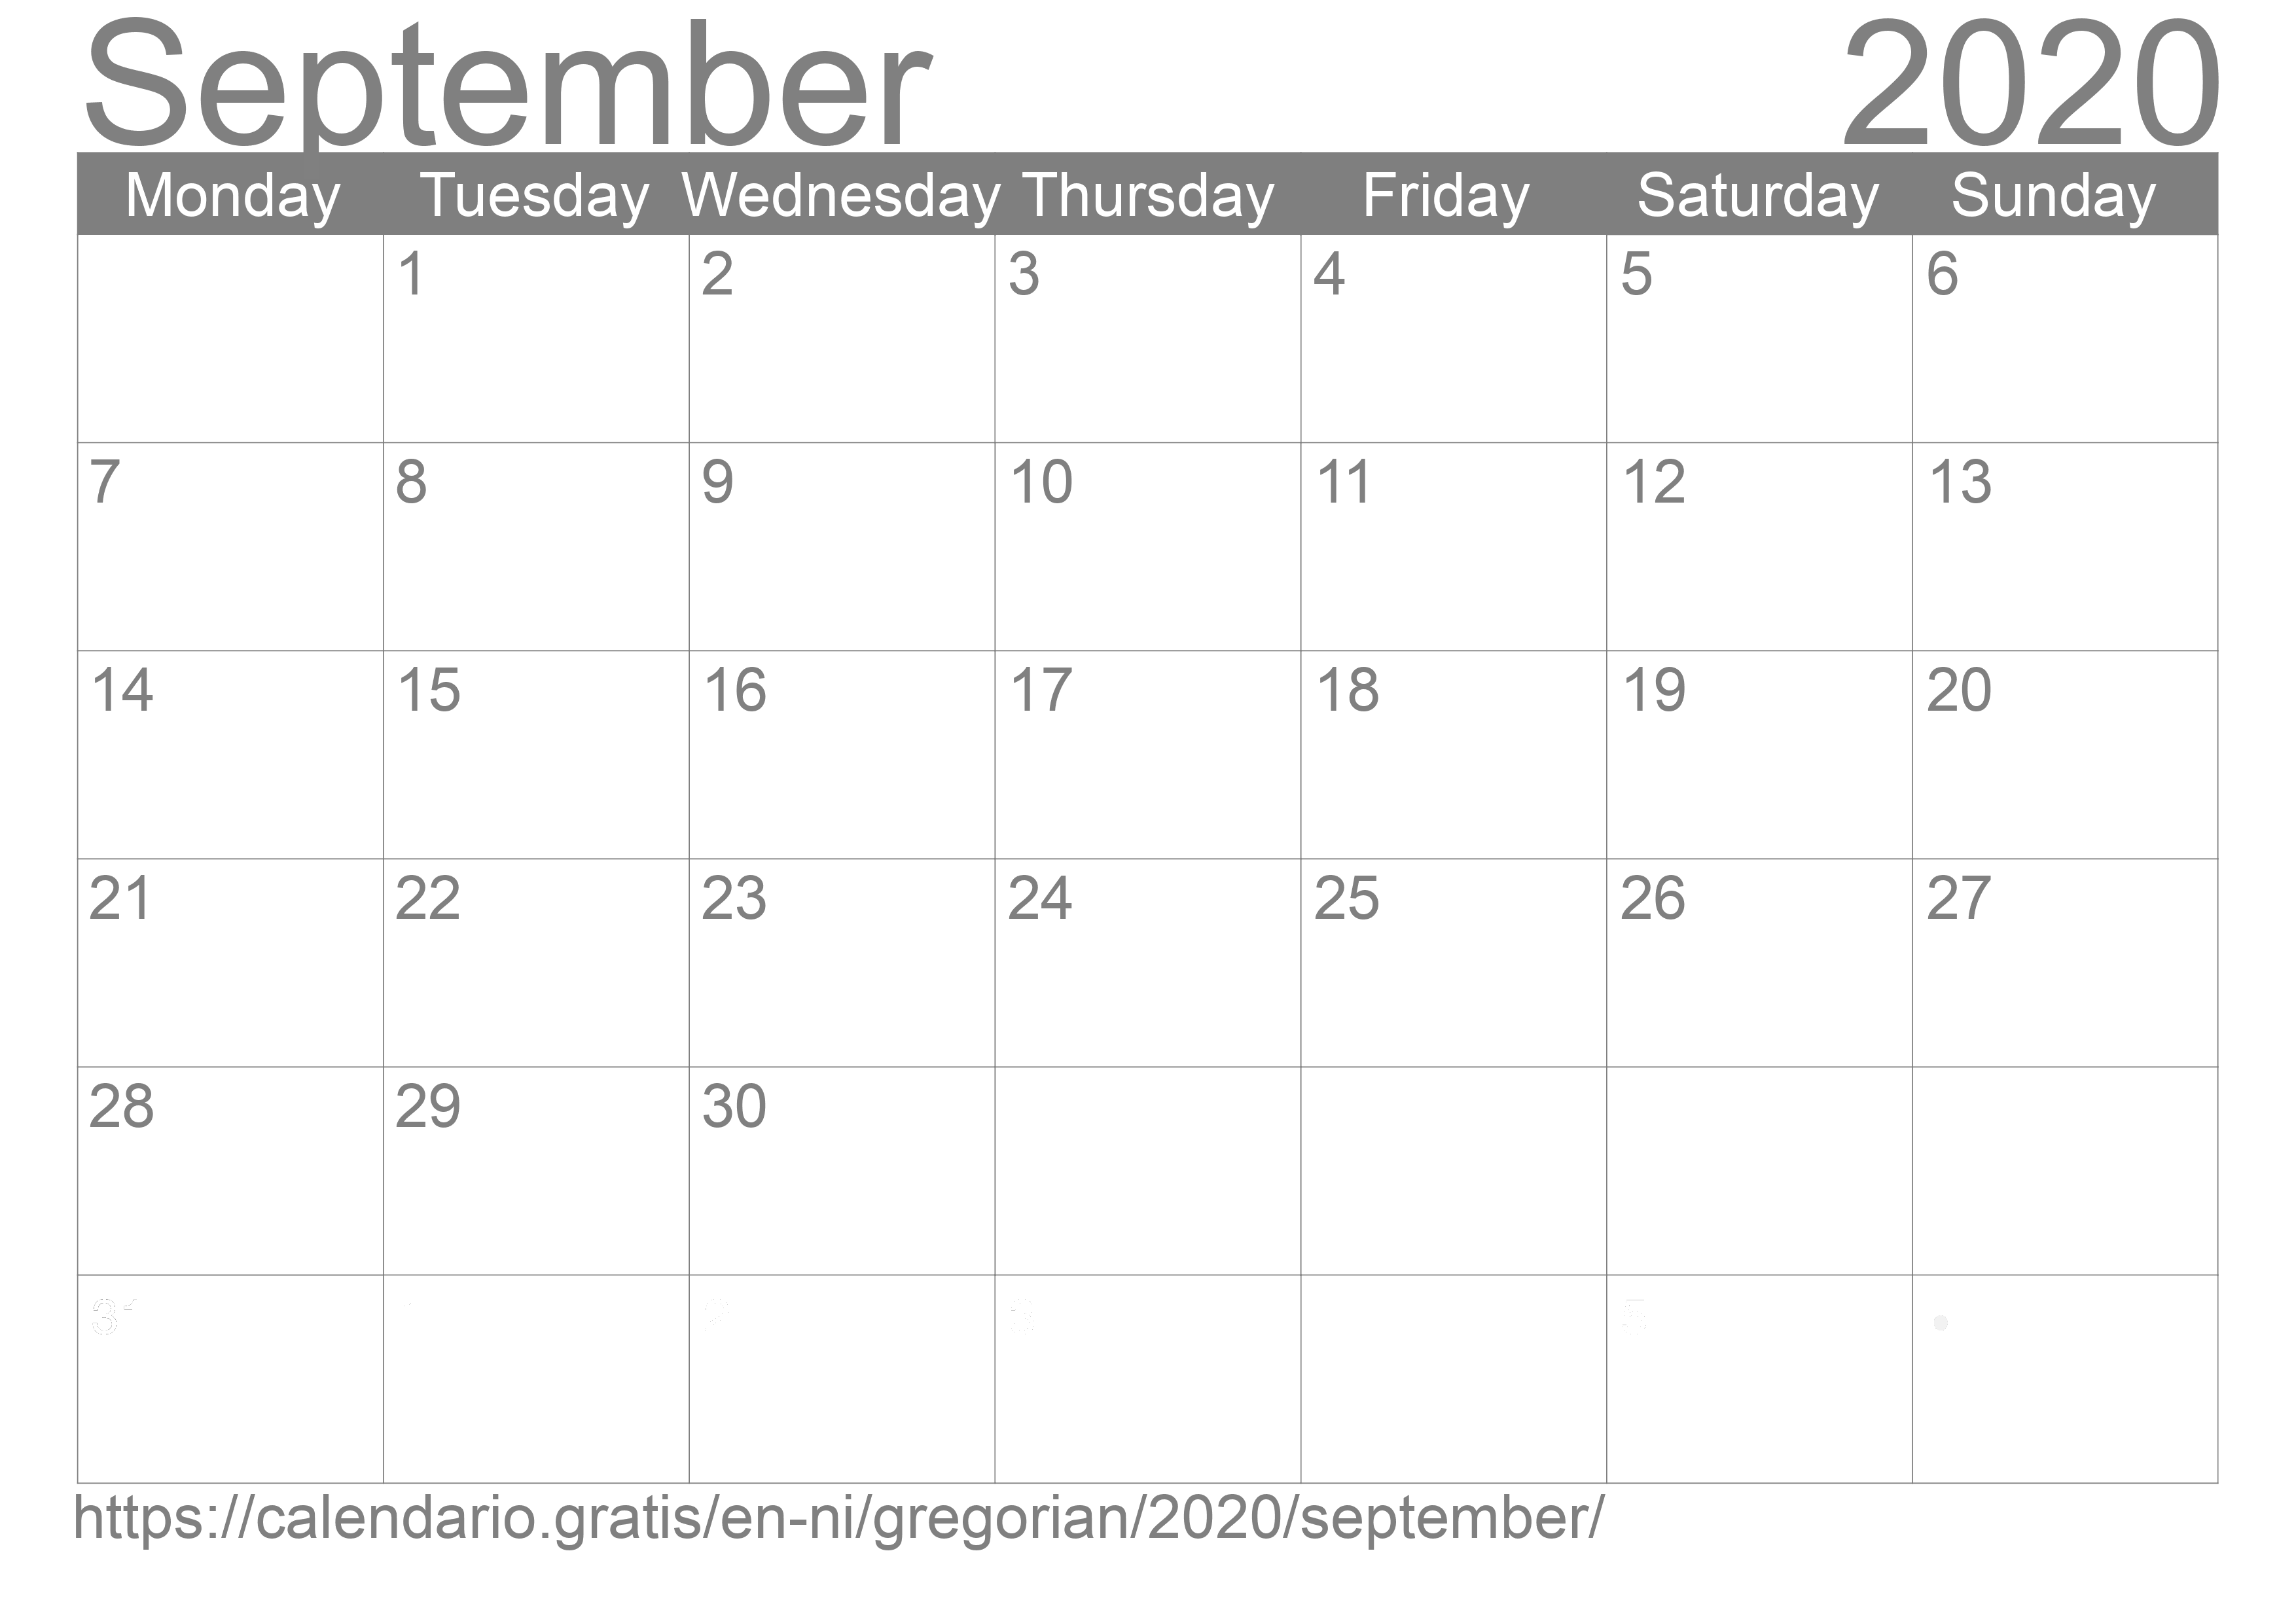 Calendar September 2020 to print